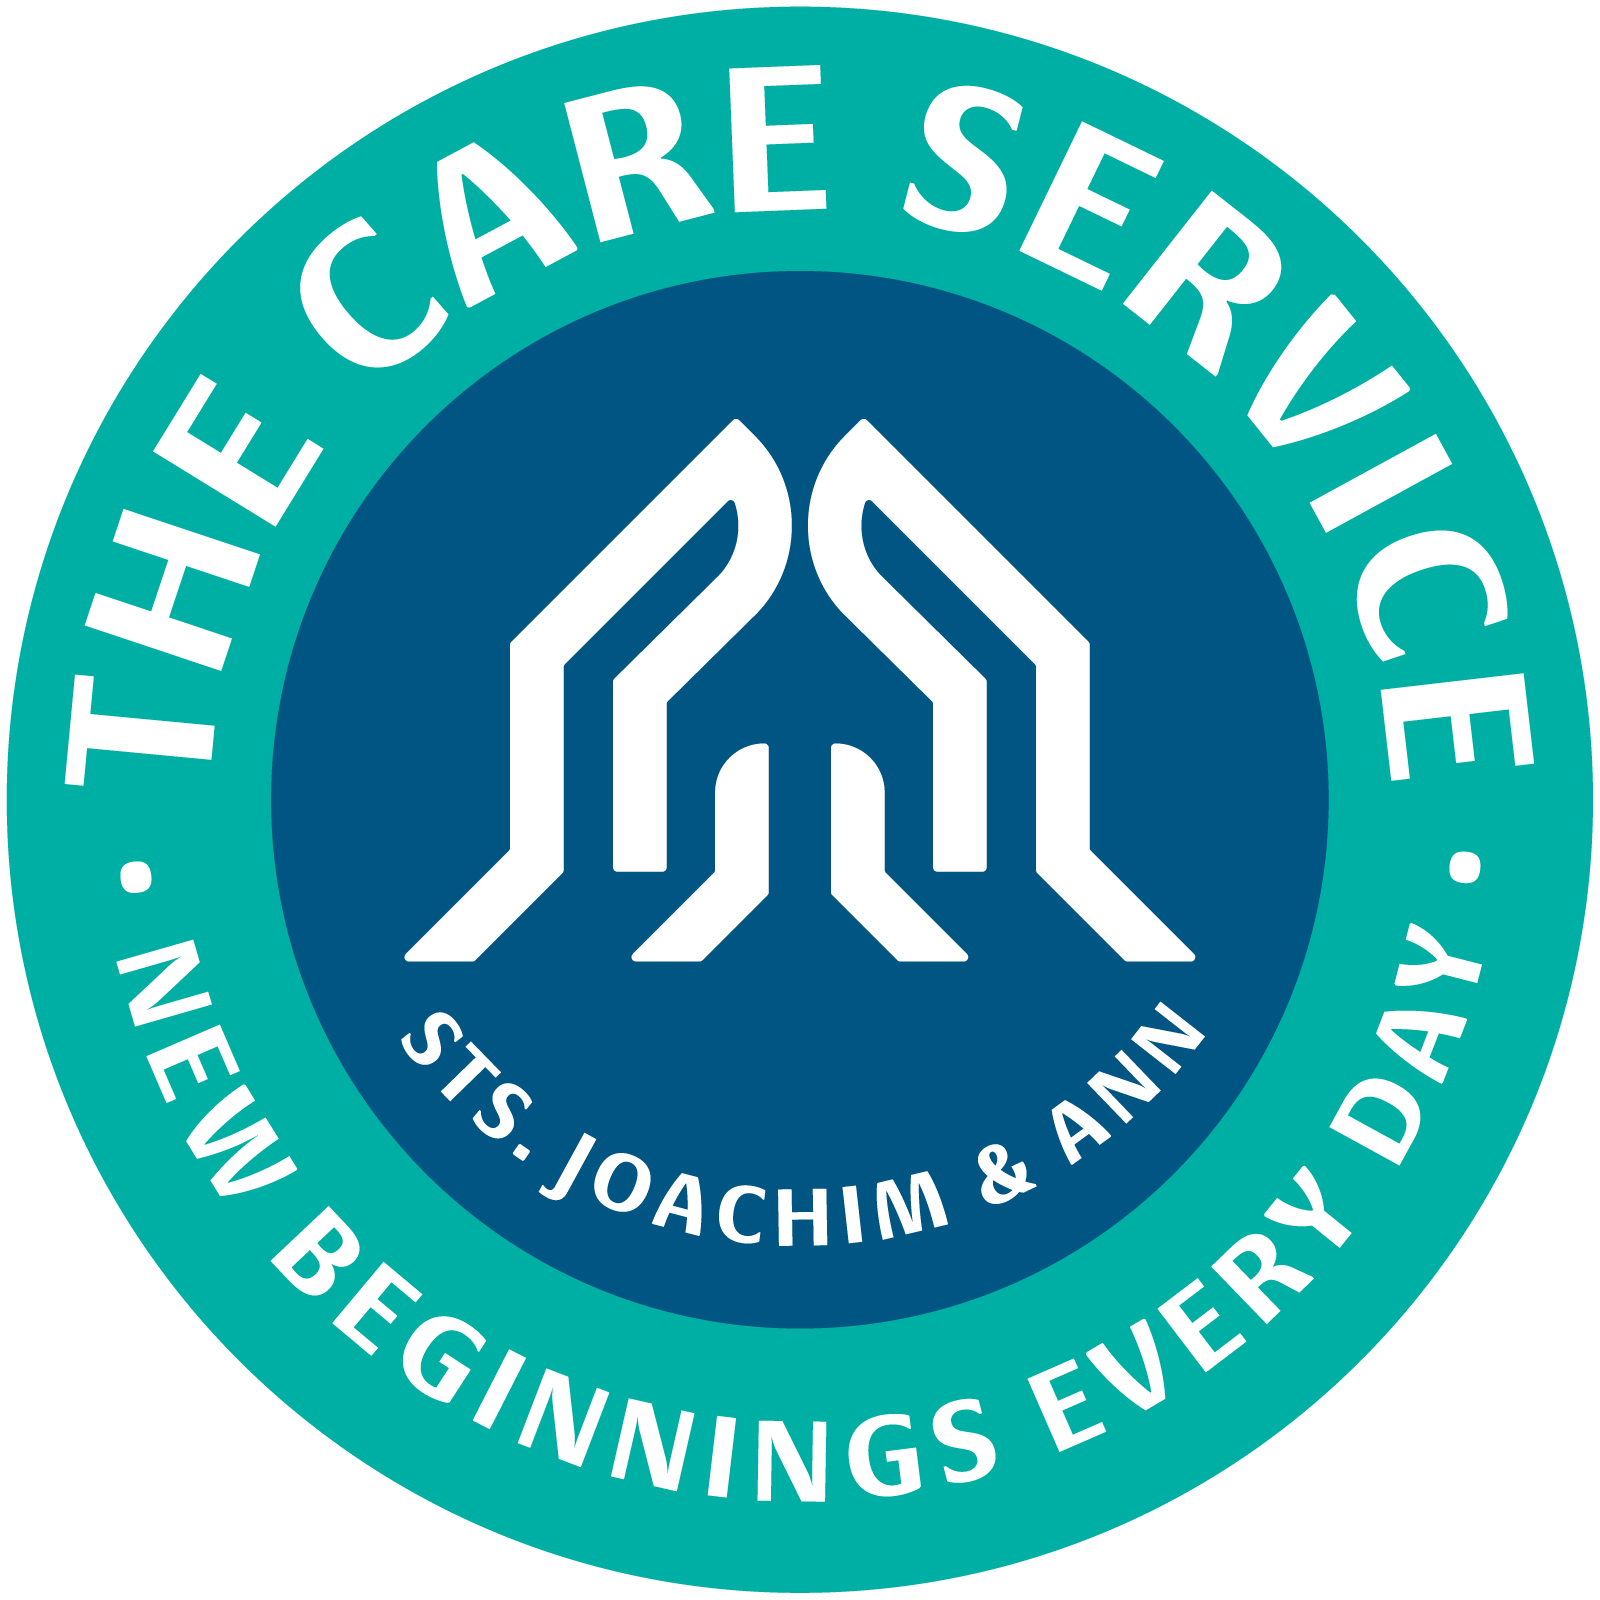 The Care Service logo